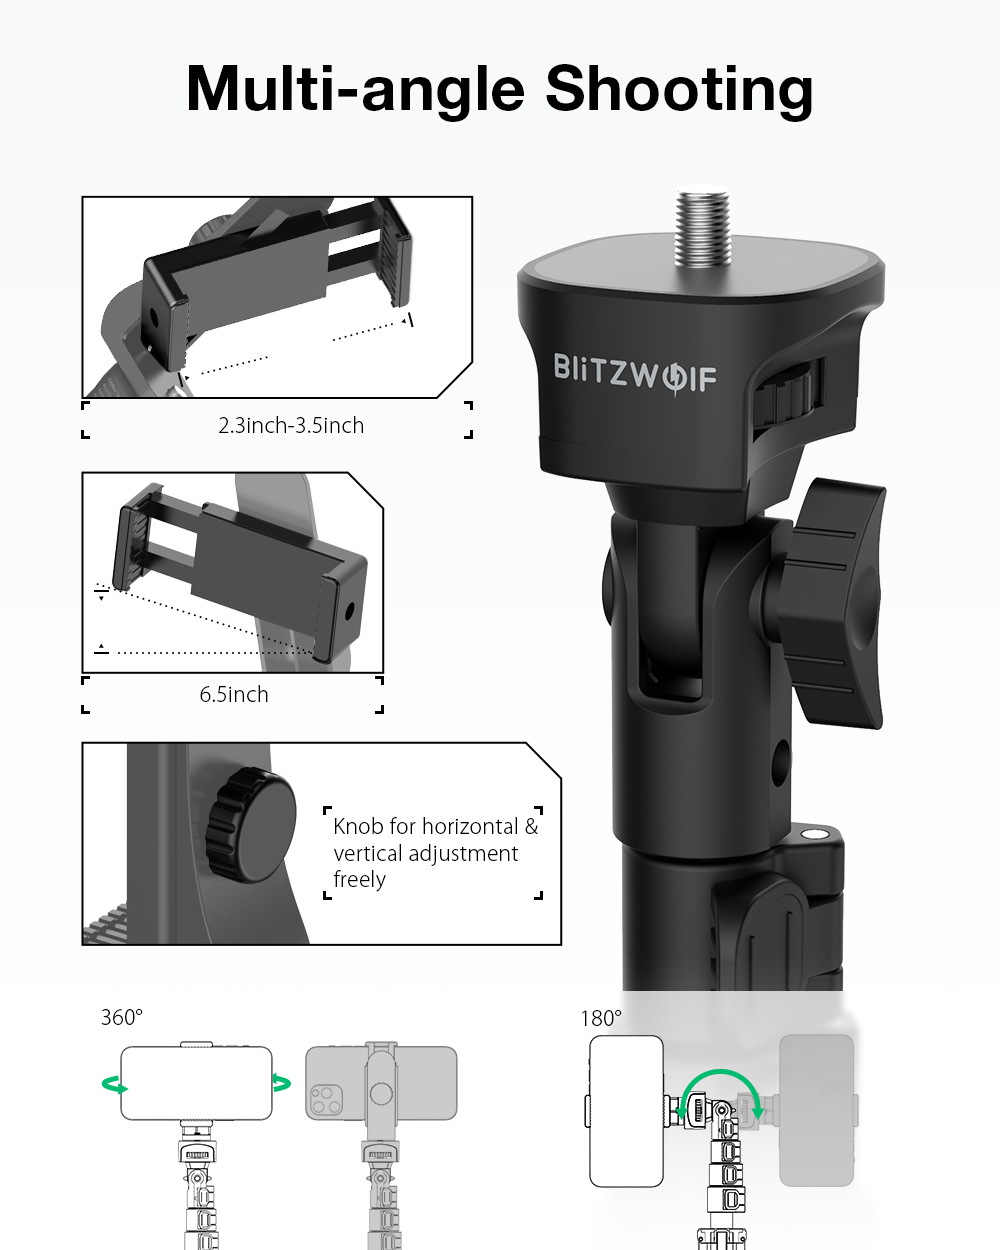 BlitzWolfreg-BW-STB1-Stable-Tripod-Selfie-Stick-Wireless-Remote-Shutter-Multi-angle-Professional-Por-1794313-6